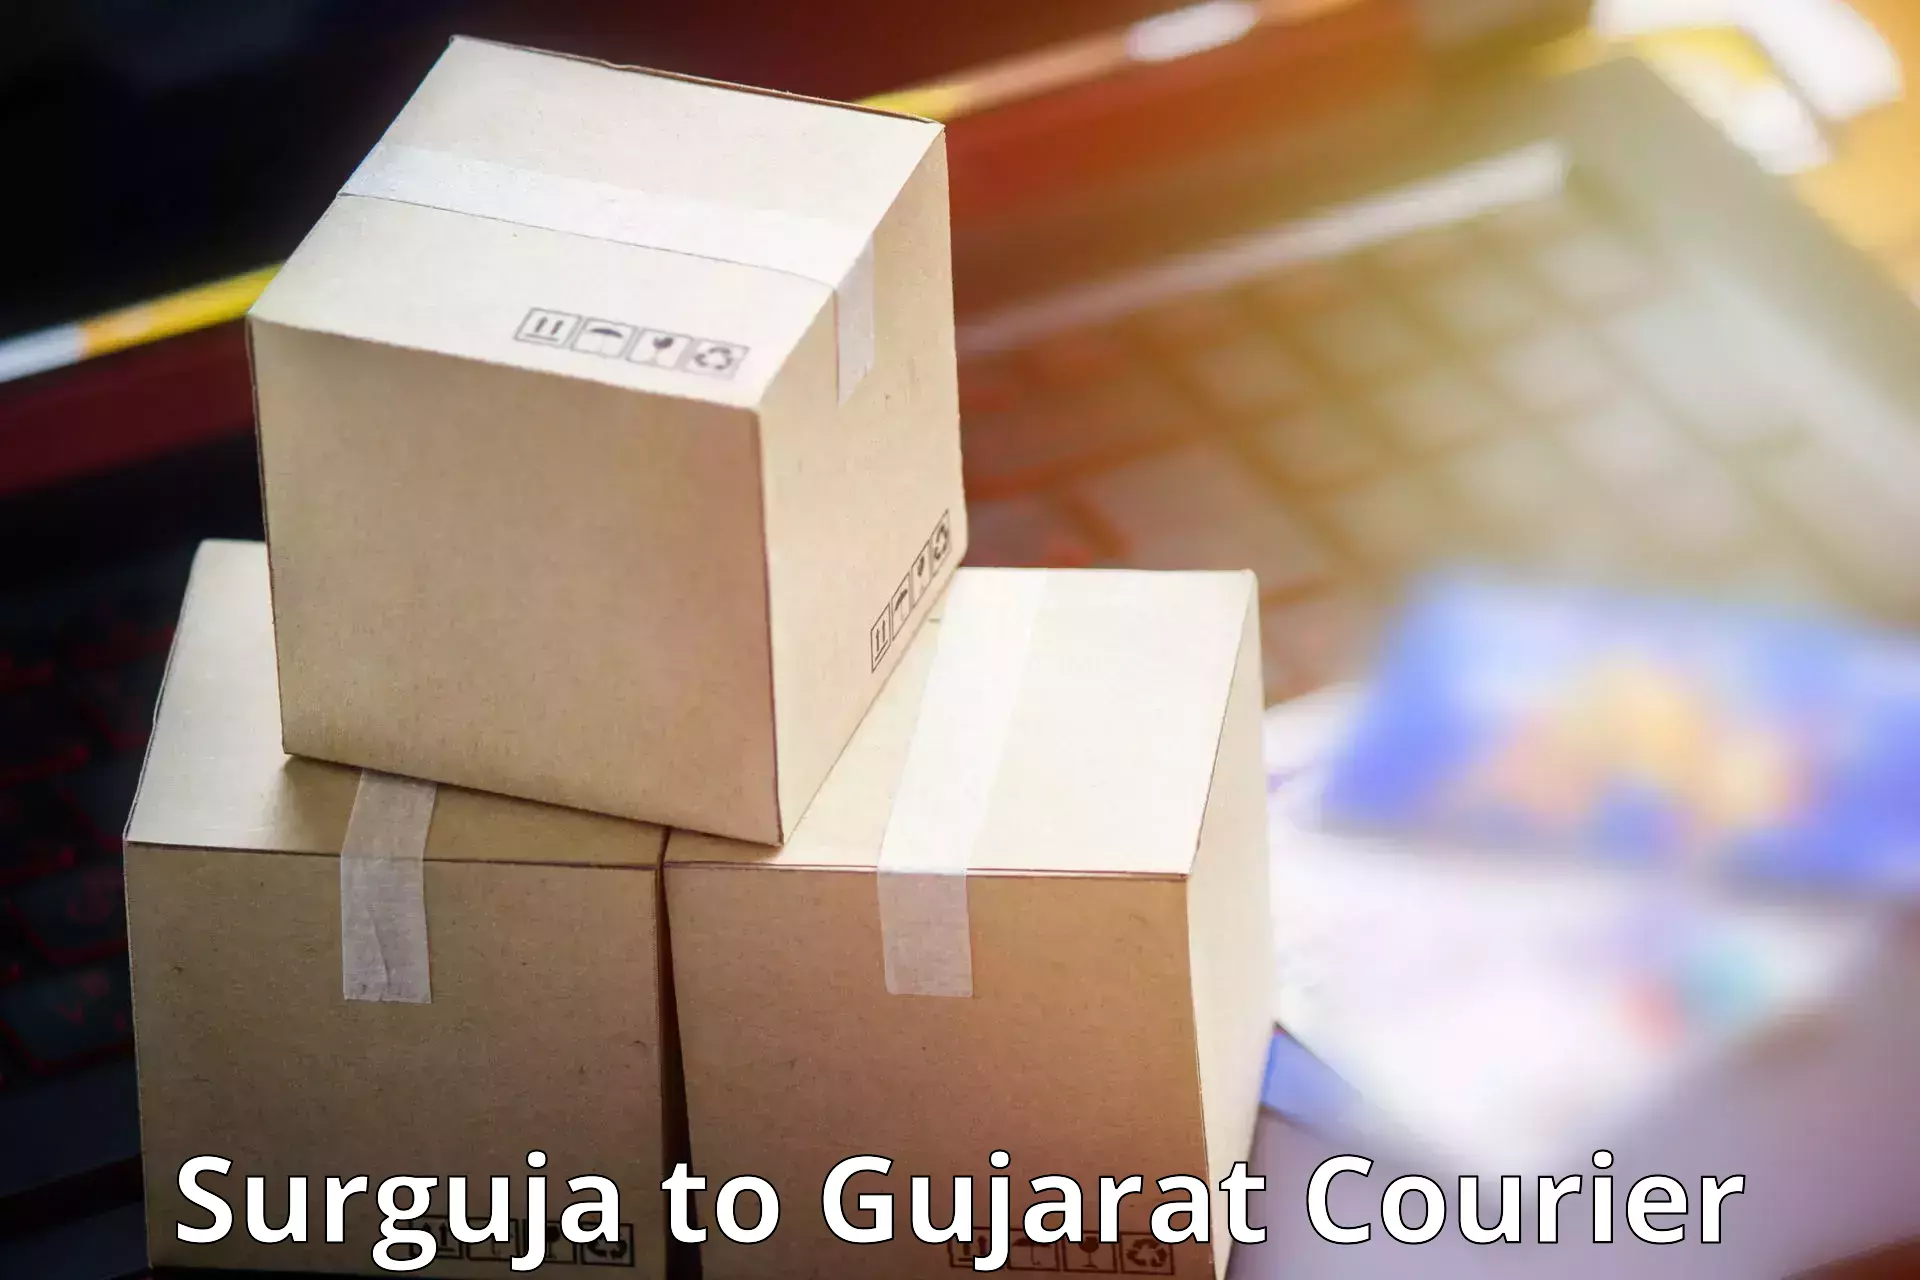 Courier service comparison Surguja to Kutiyana